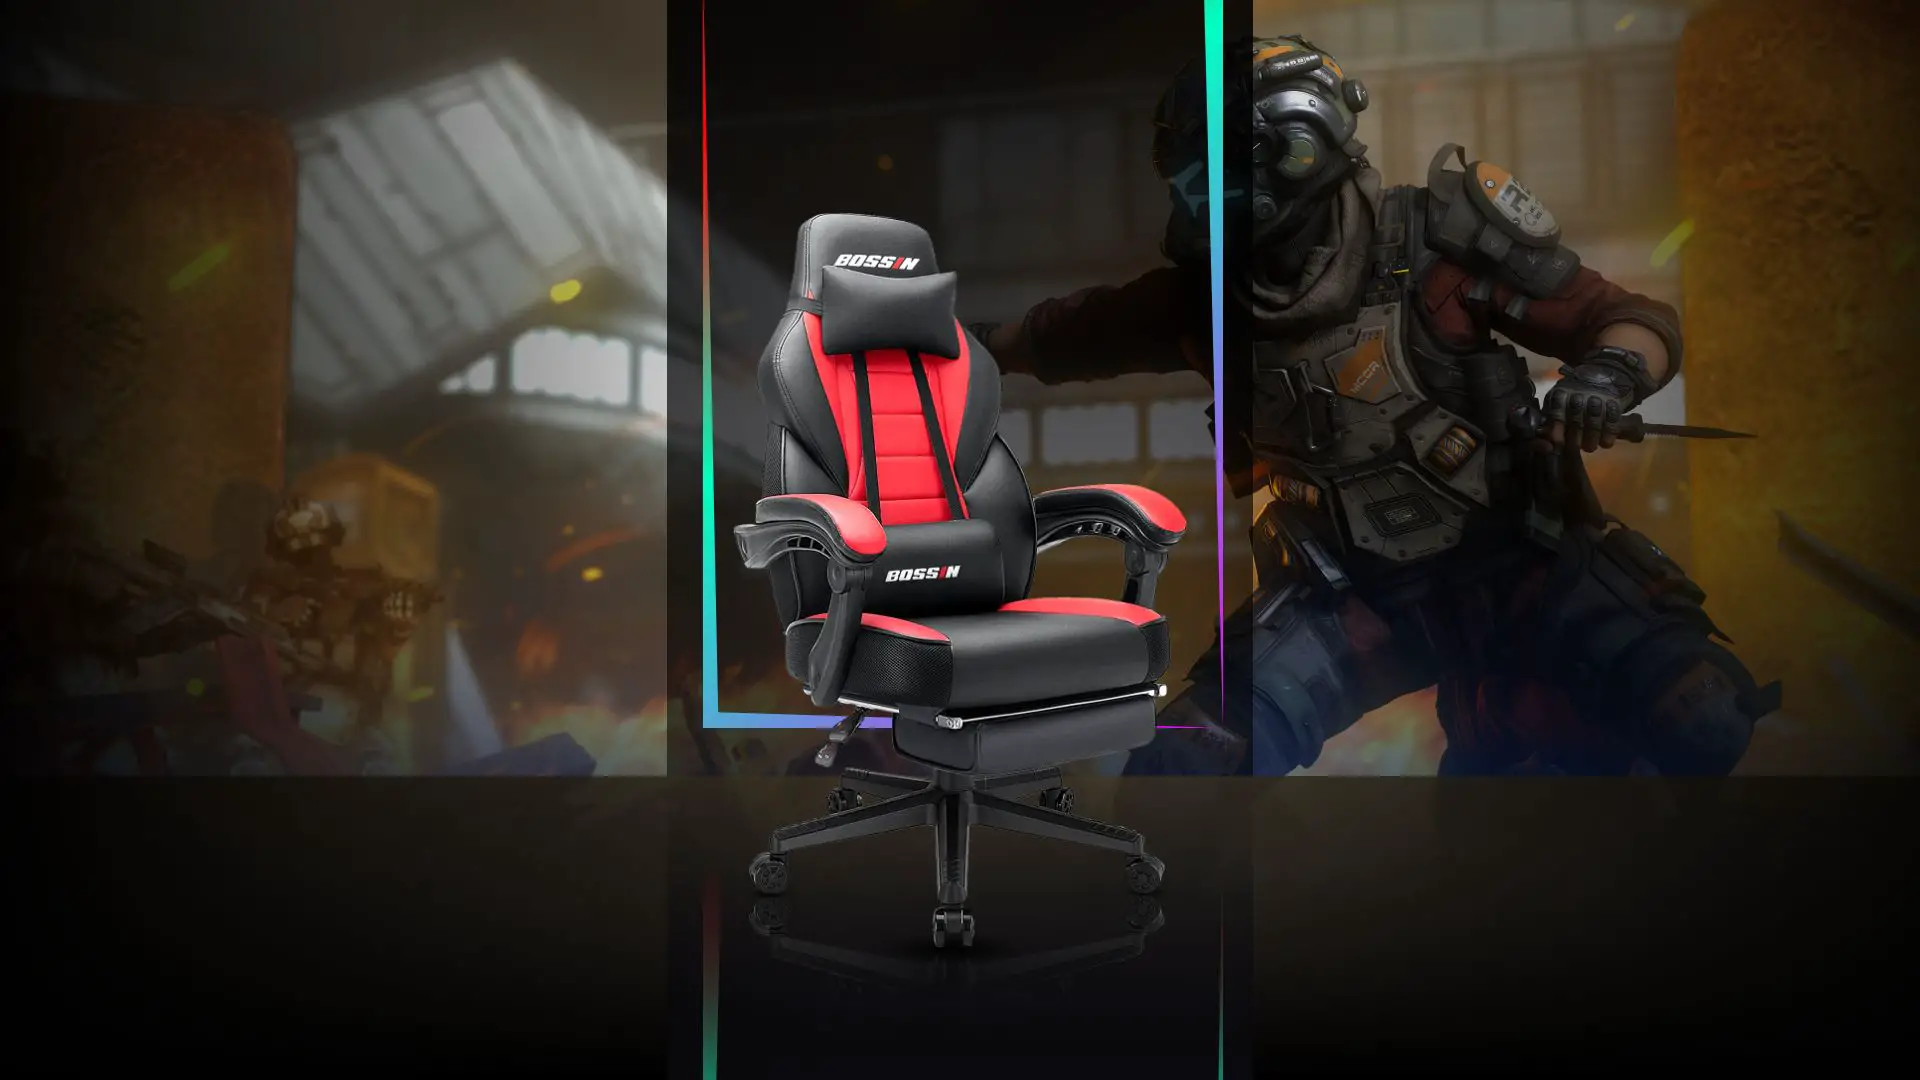 3.LEMBERI Video Game Chair